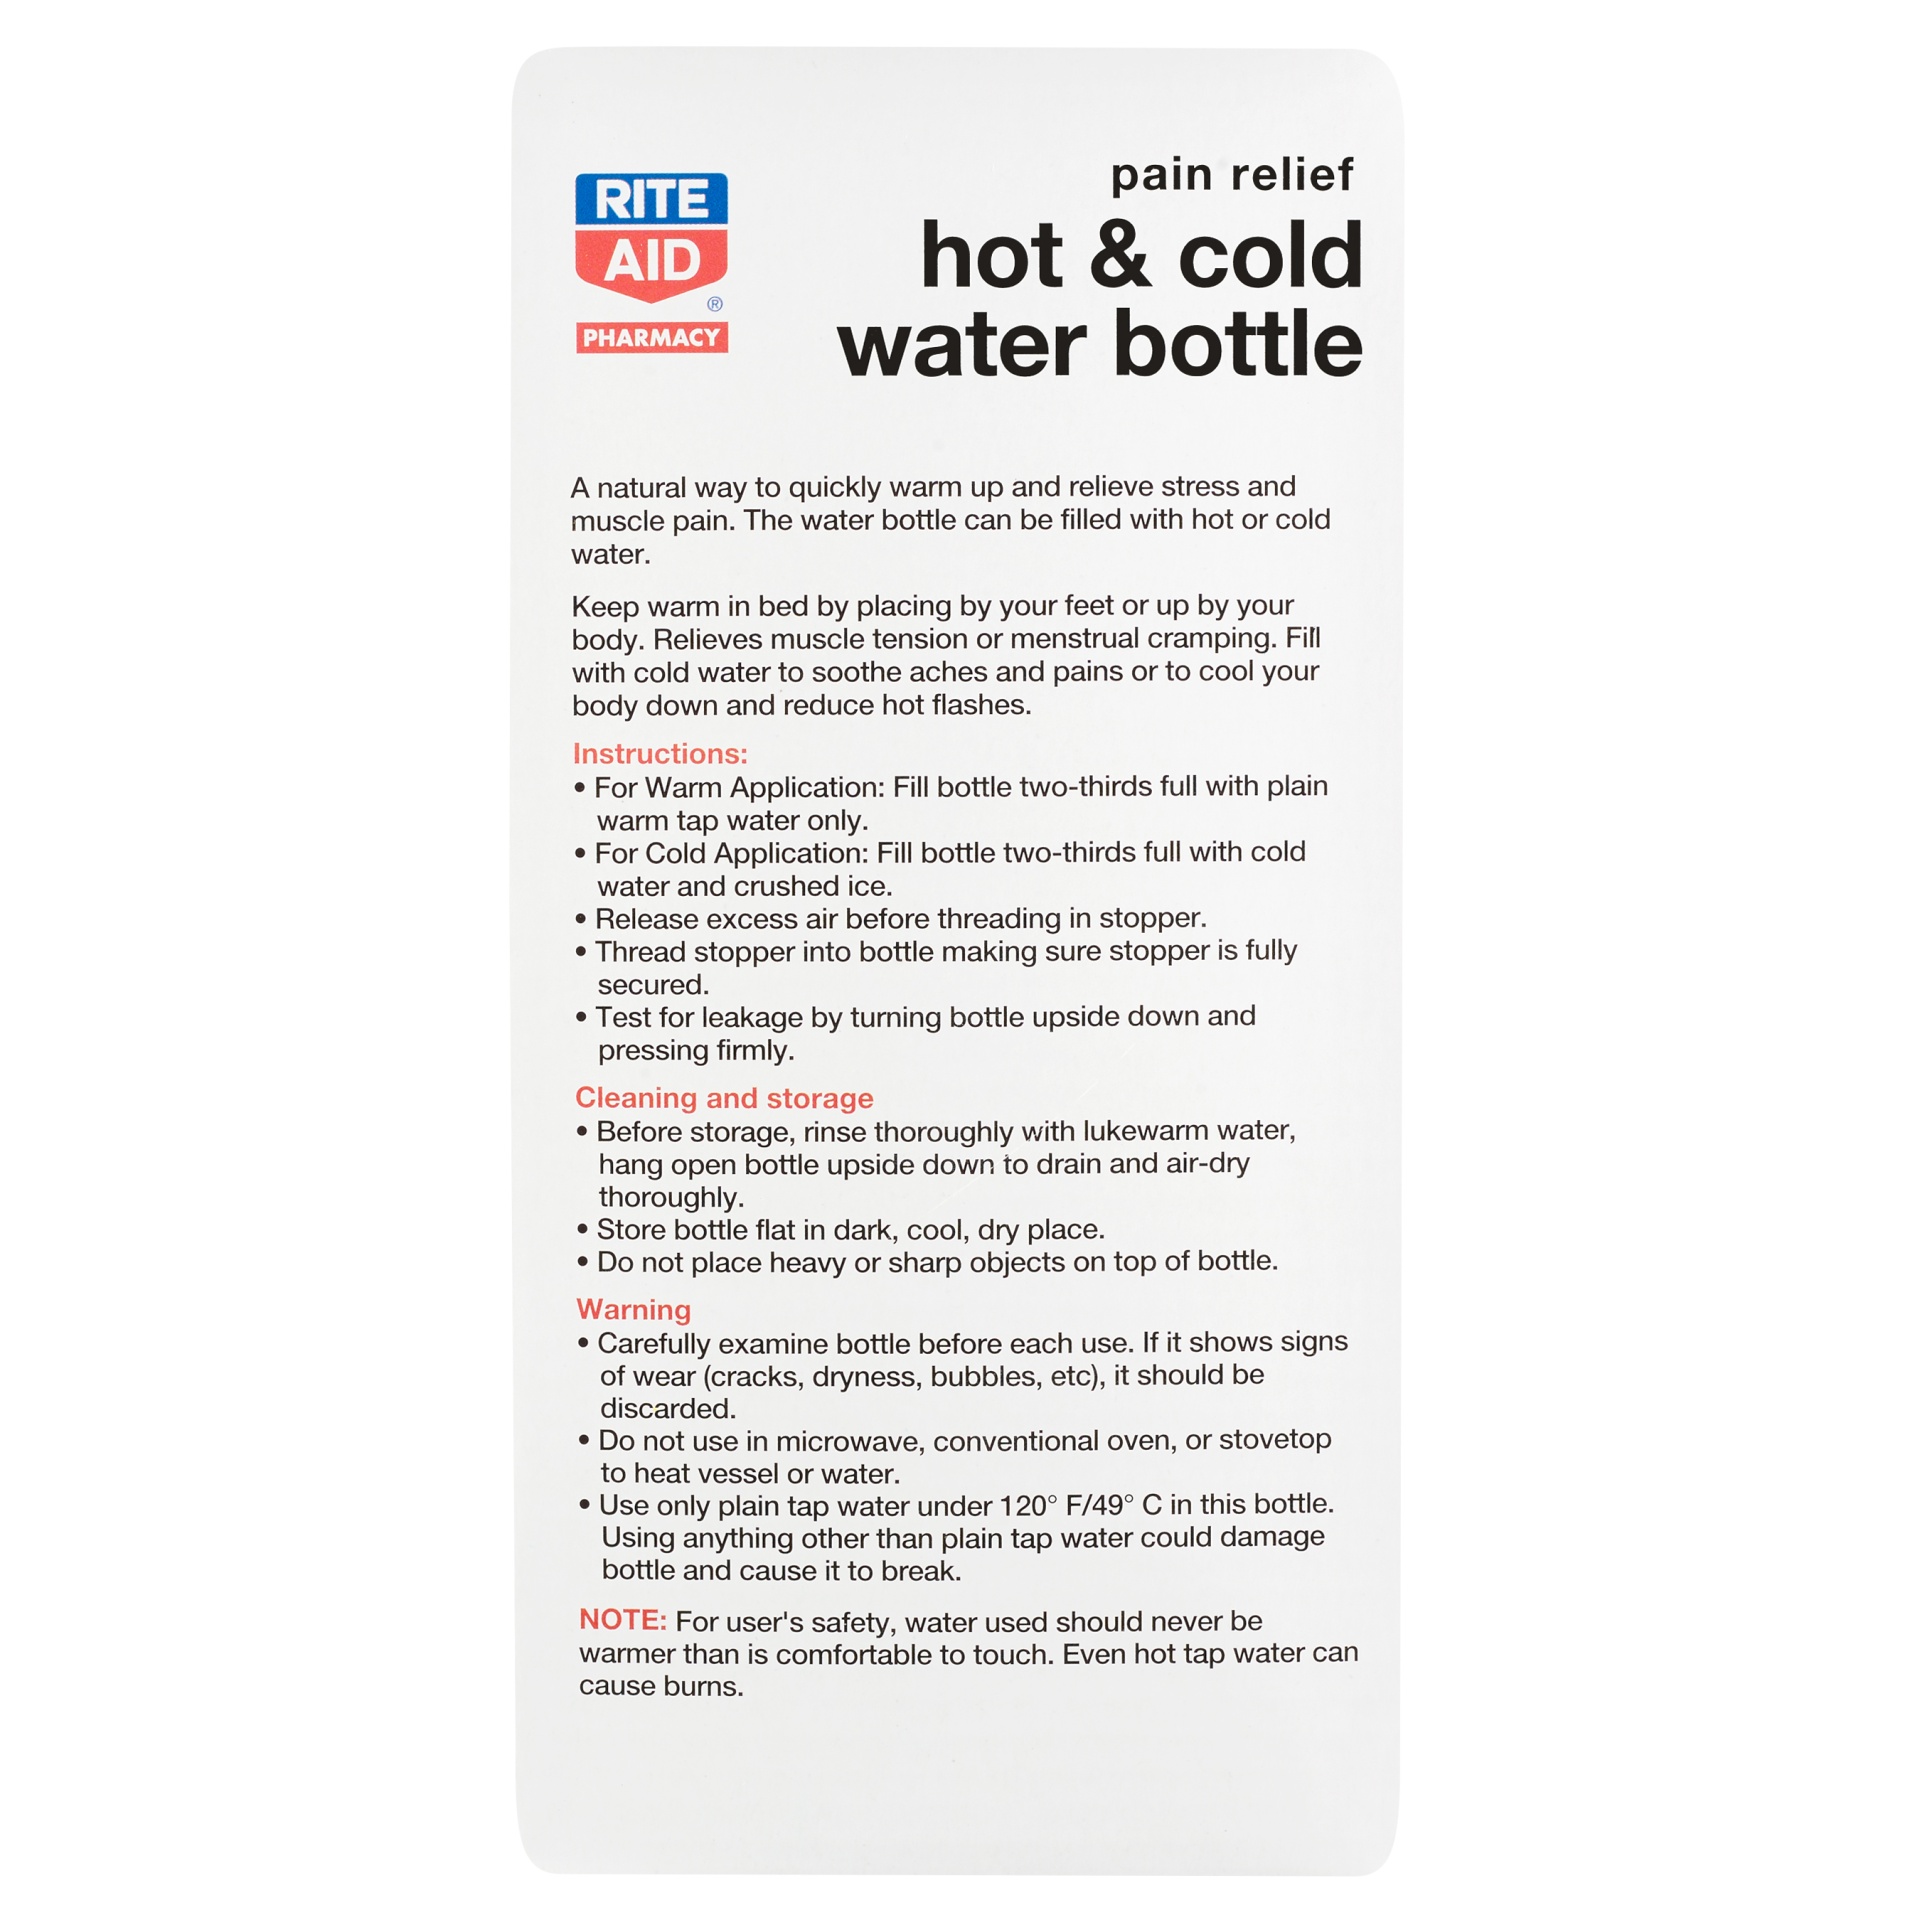 Hot Water Bottle, 2 quart